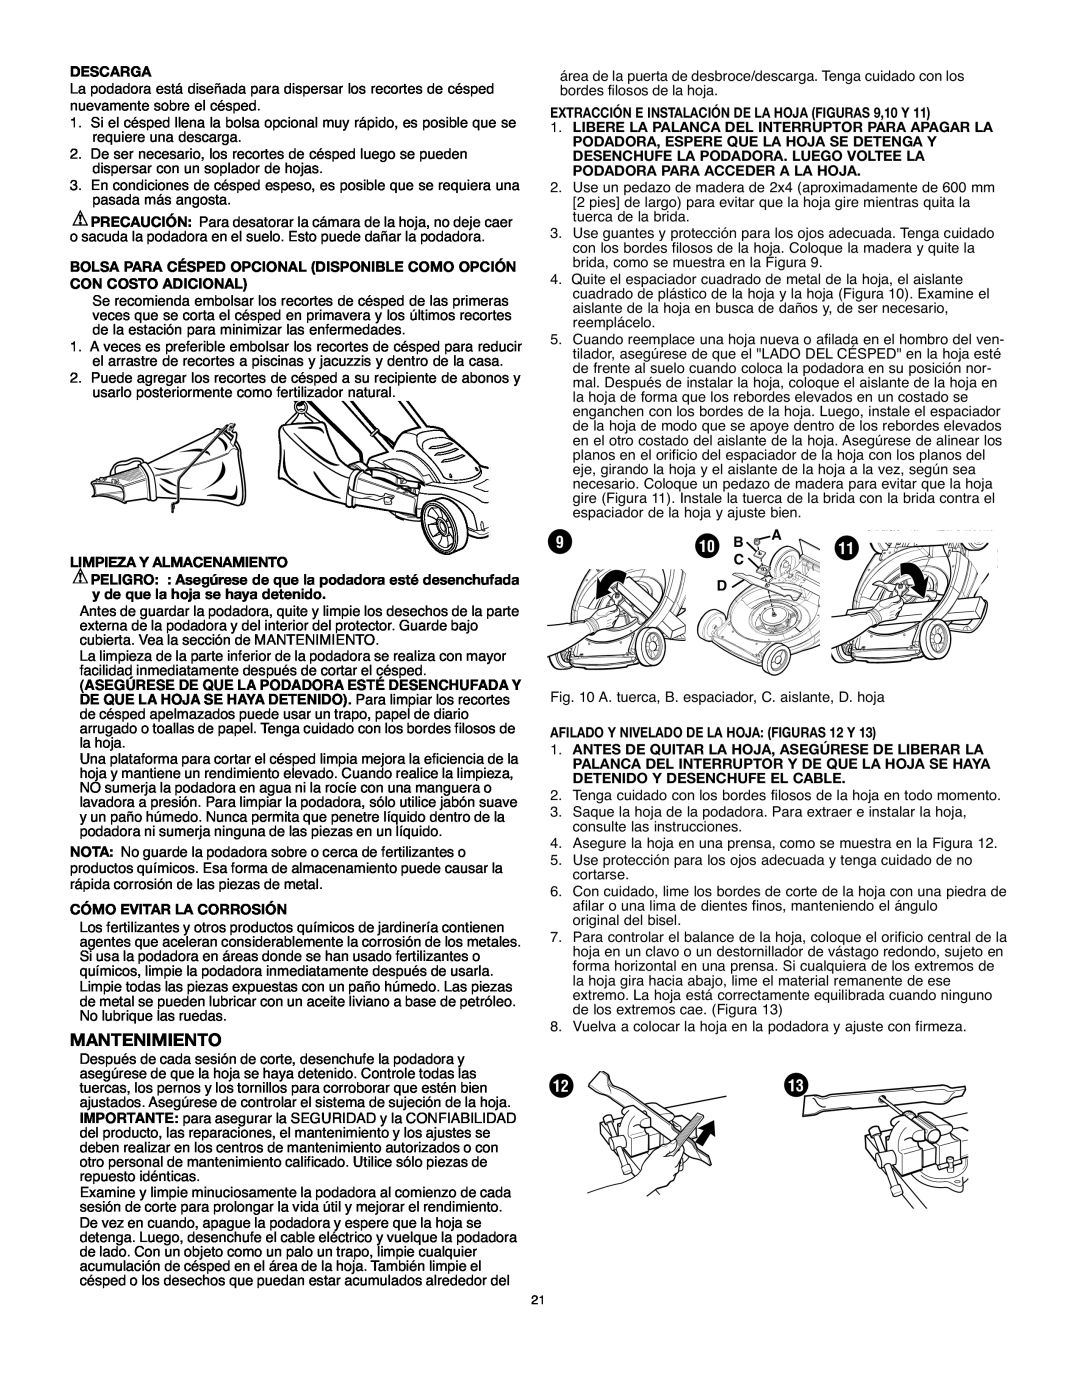 Black & Decker LM175 instruction manual Mantenimiento, 10 B 